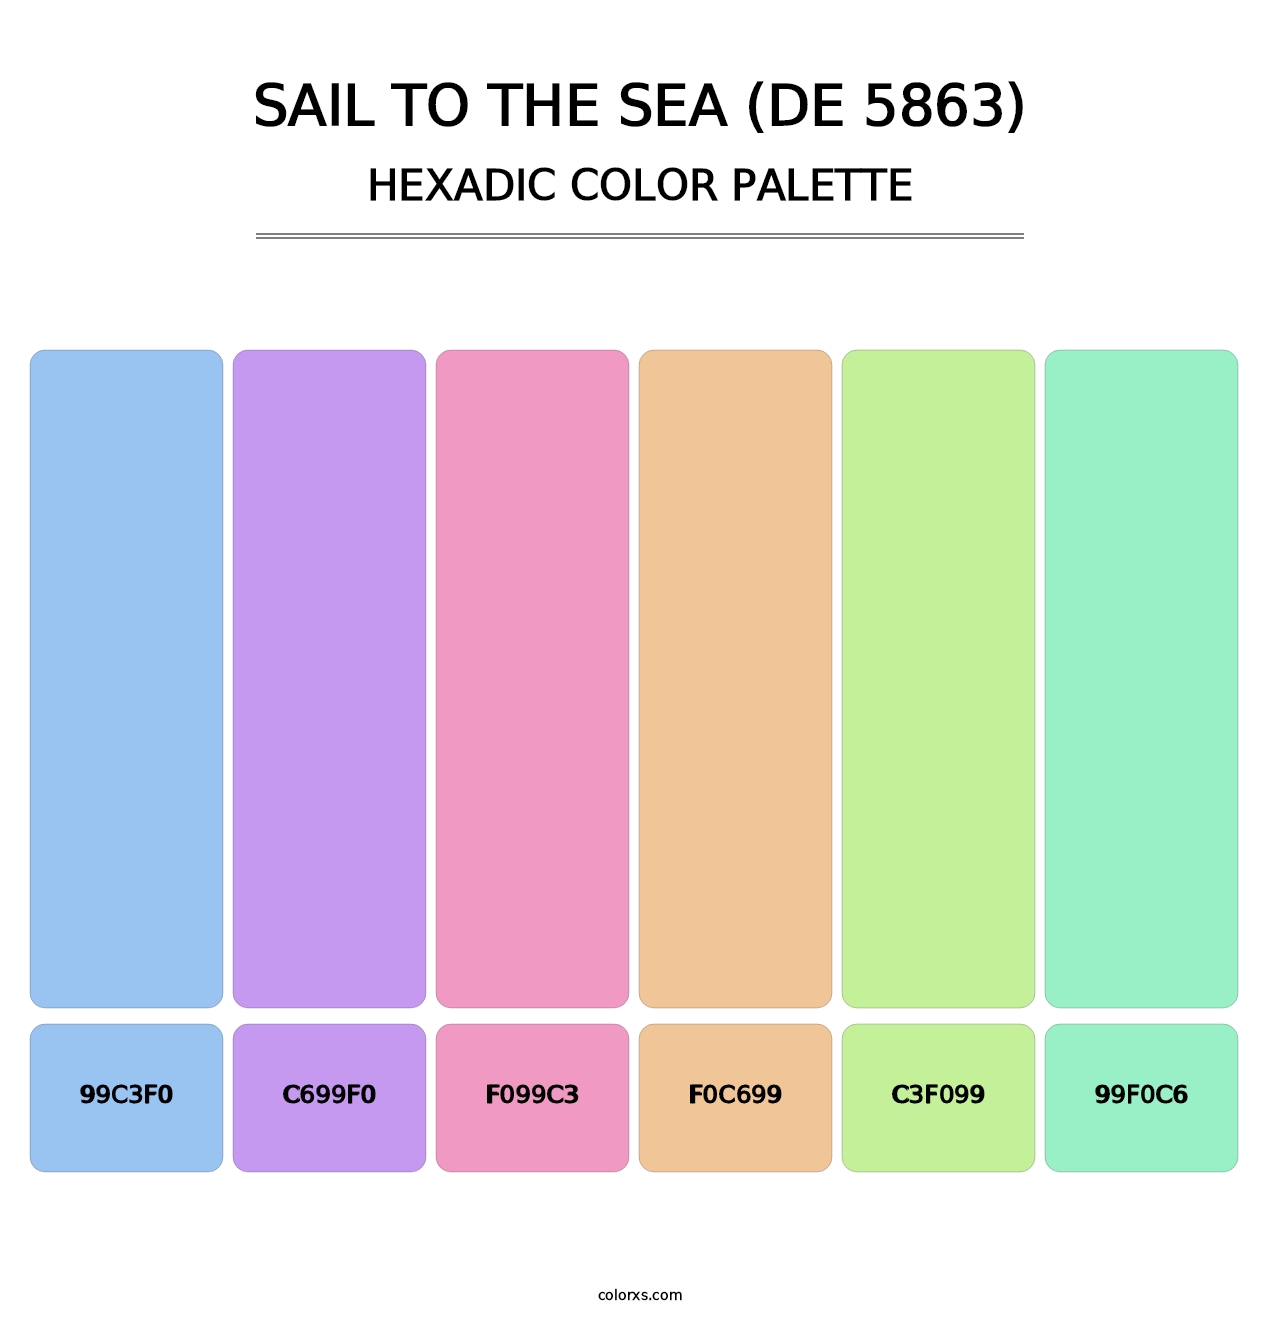 Sail to the Sea (DE 5863) - Hexadic Color Palette